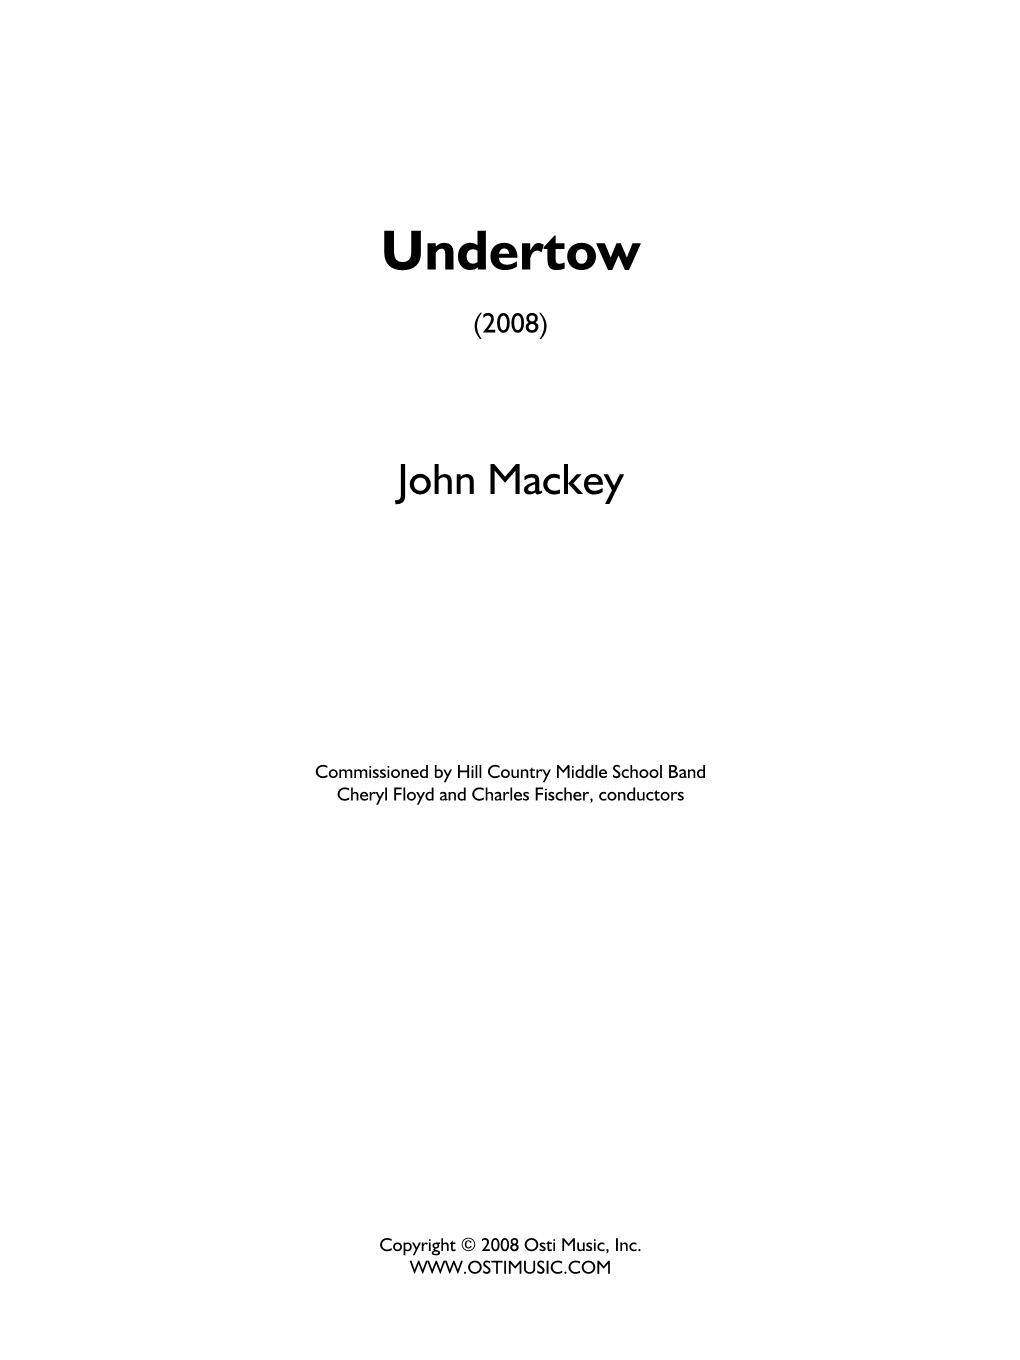 Undertow-Score Only 3-23